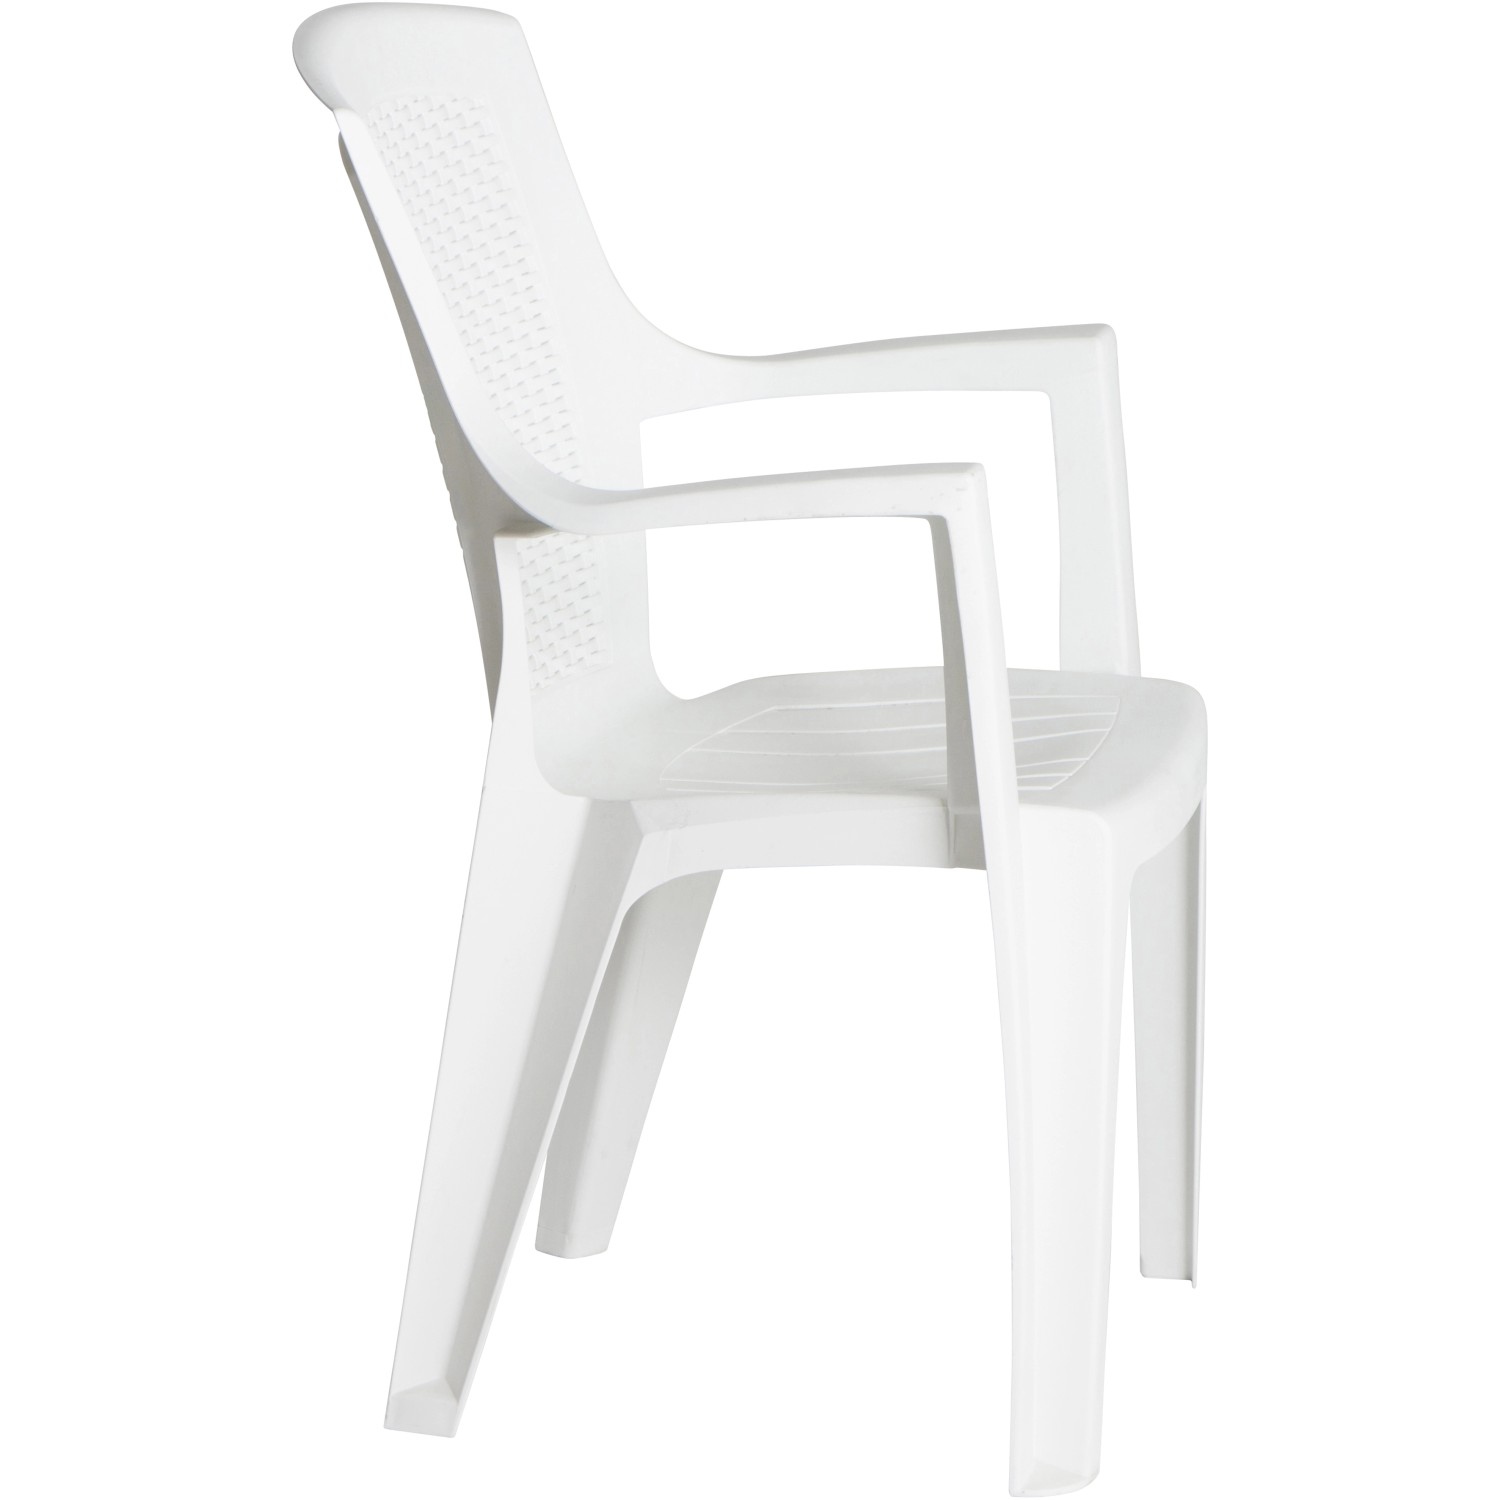 Progarden Stapelsessel Eden Weiß 62 cm x 60 cm x 89 cm kaufen bei OBI | Sessel